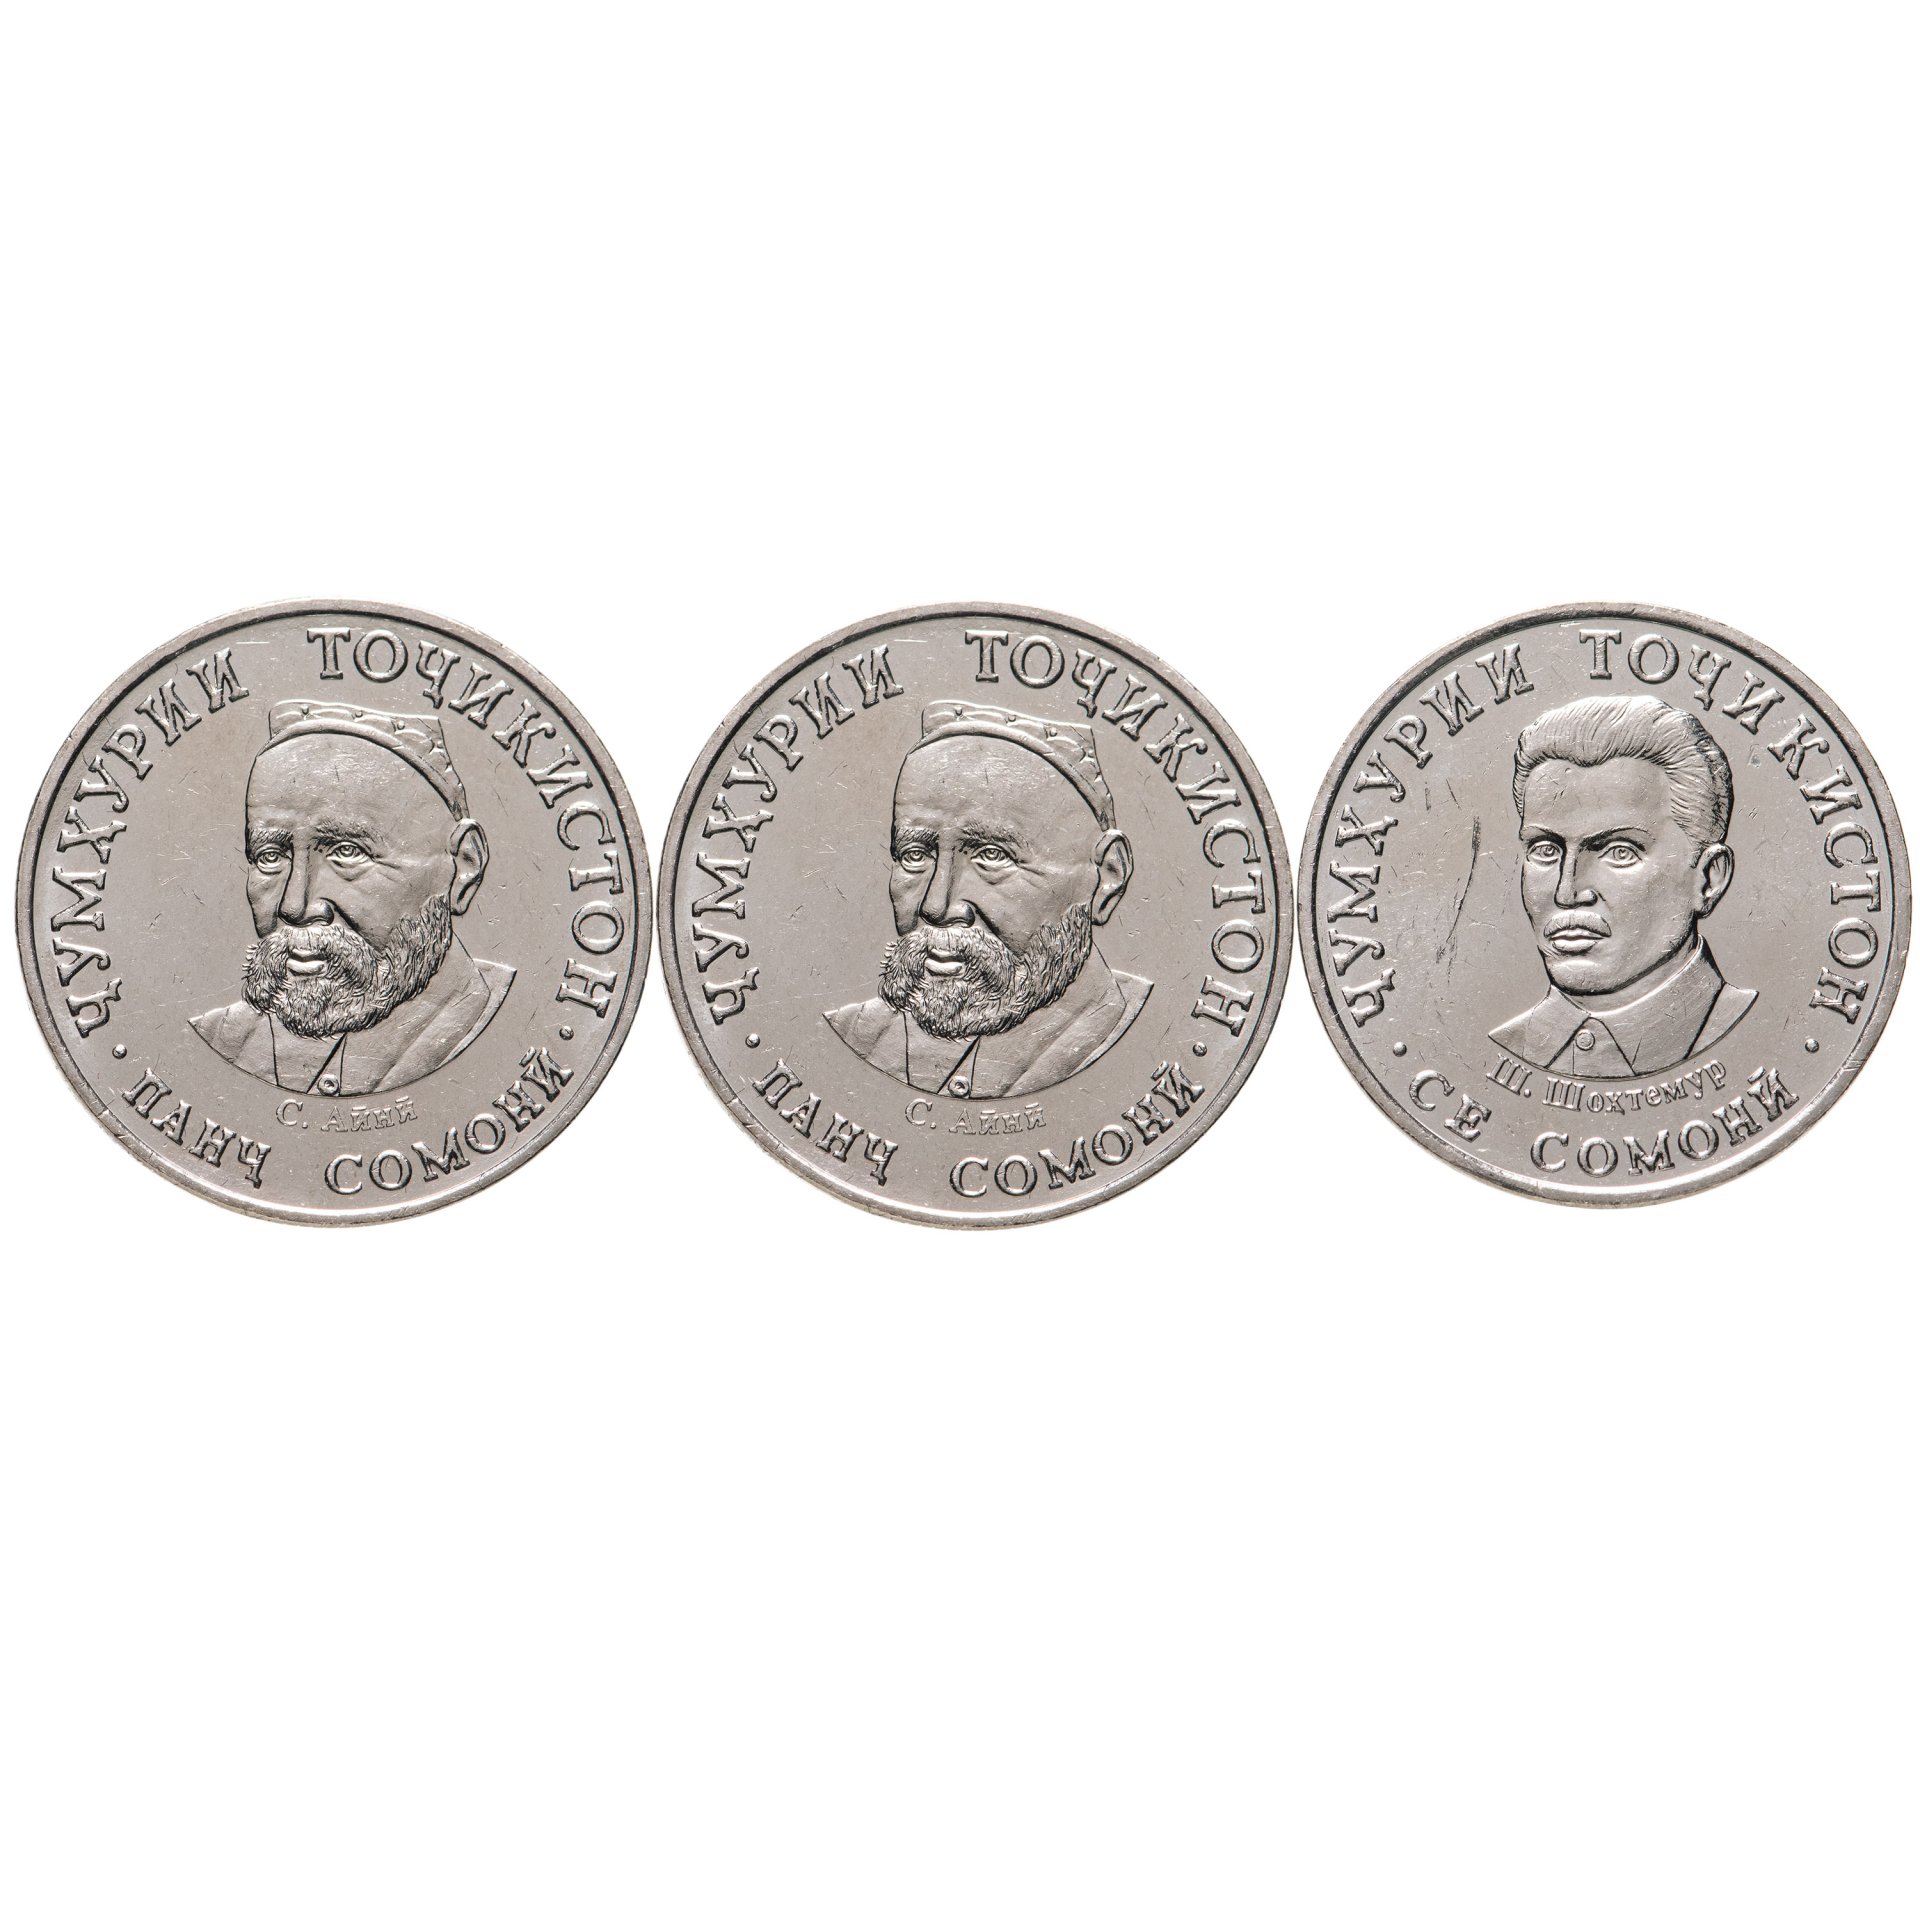 60 сомони в рублях. Монеты Таджикистана. Дирам чья монета.